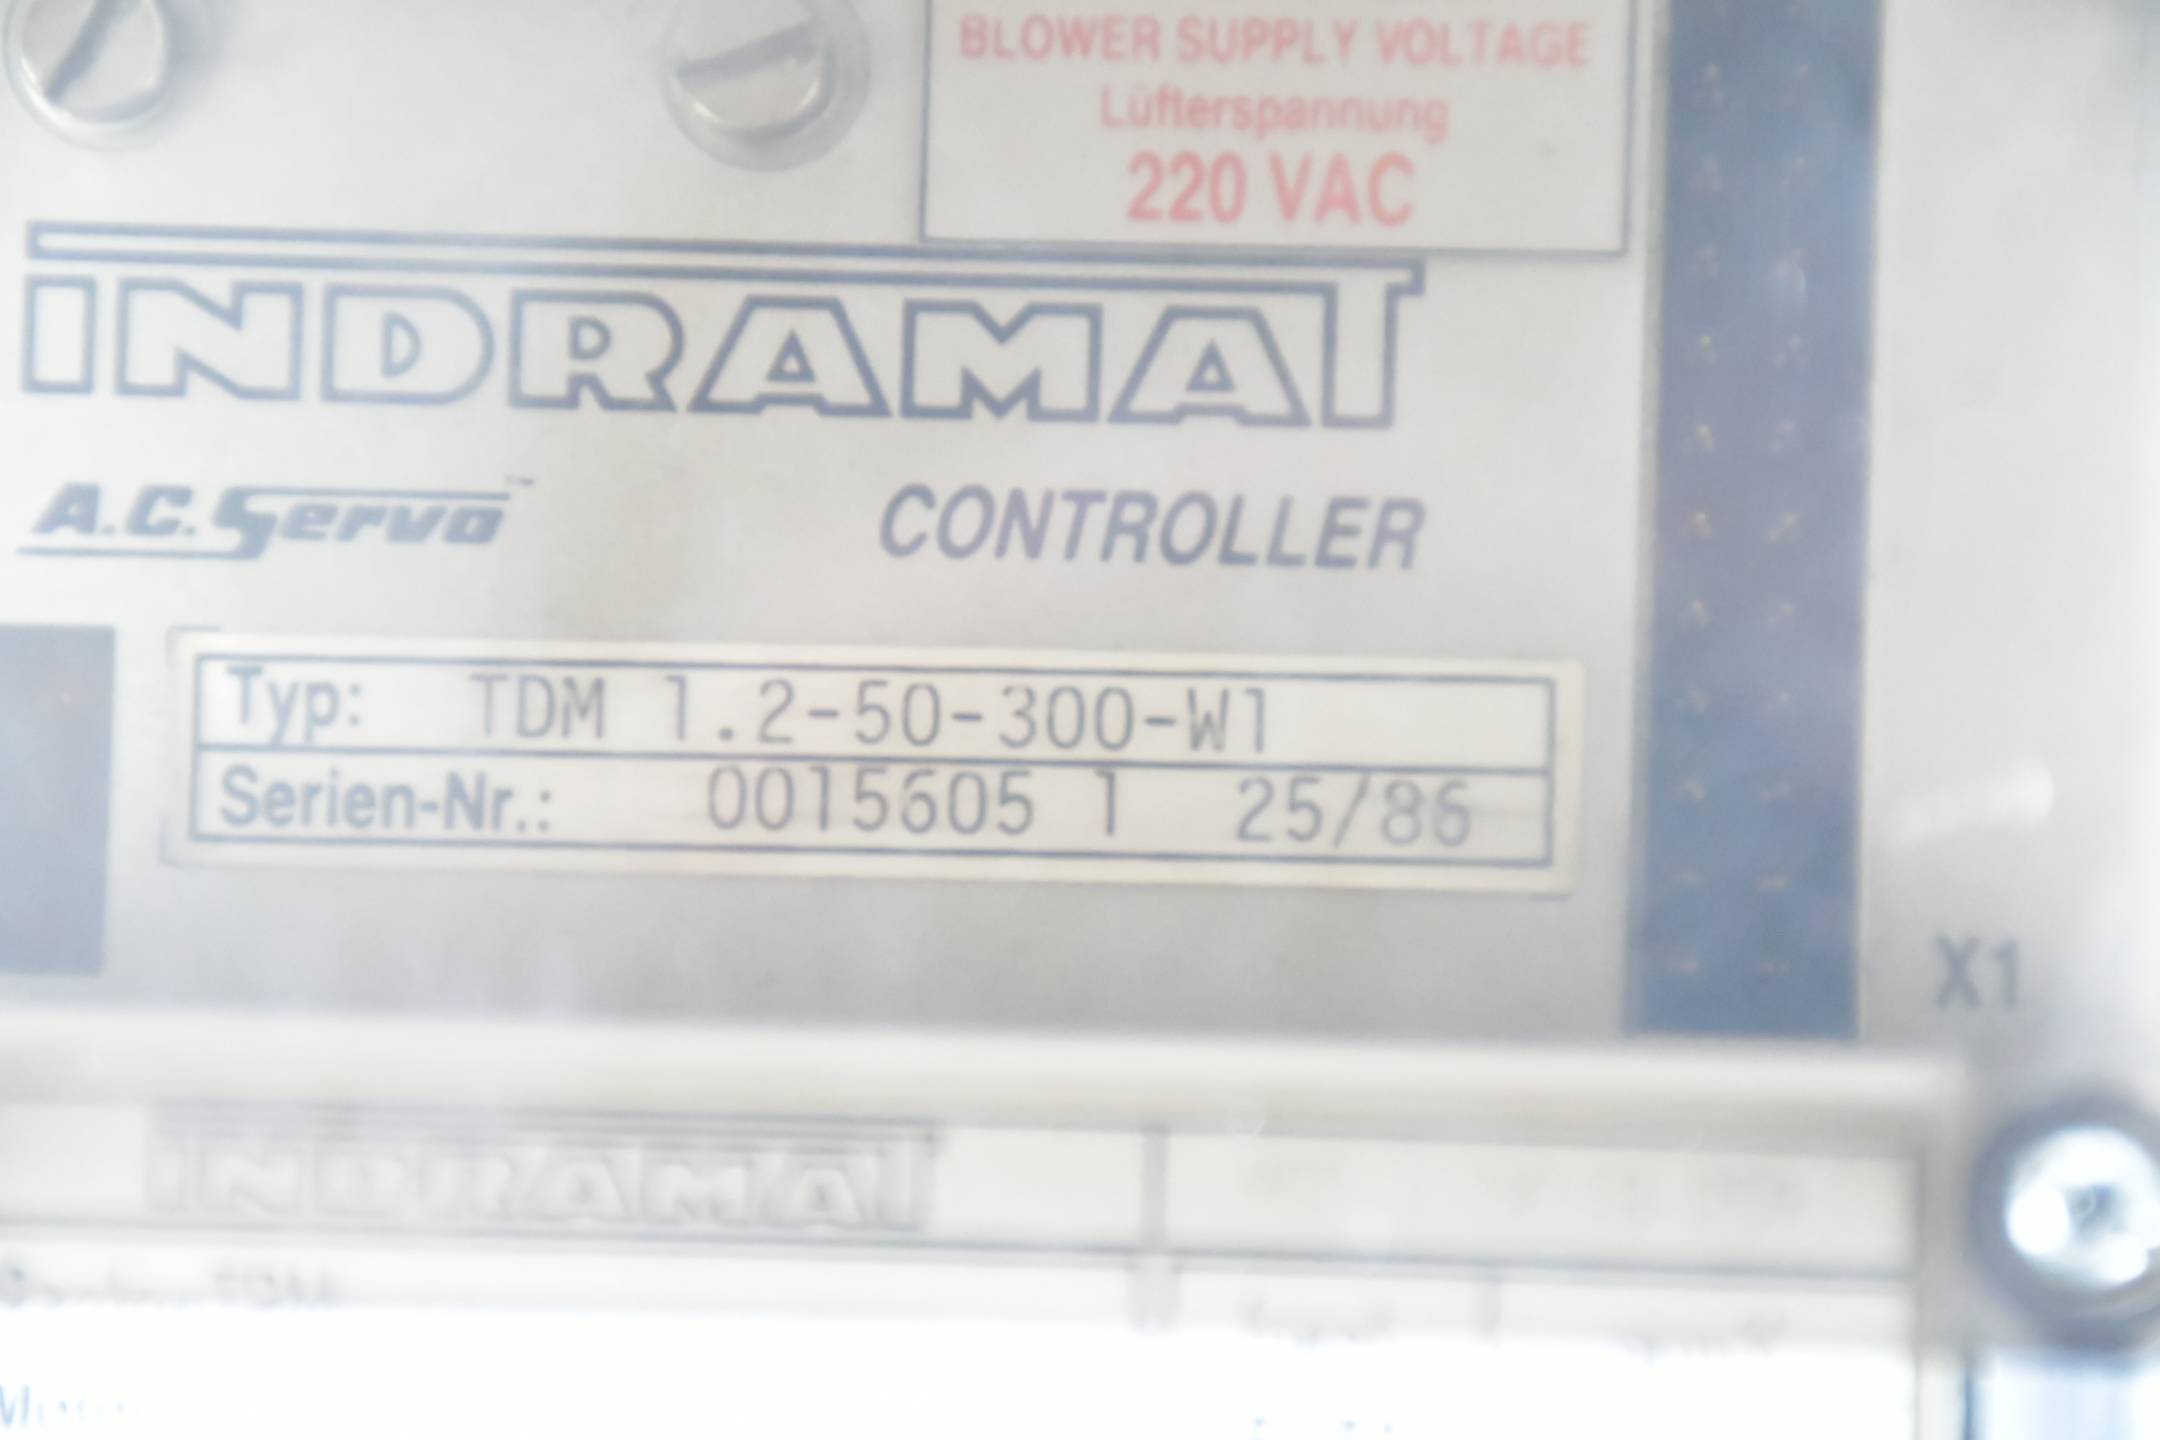 Indramat A.C. Controller TDM 1.2-50-300-W1 Inkl. Mod. 1/1X118-59